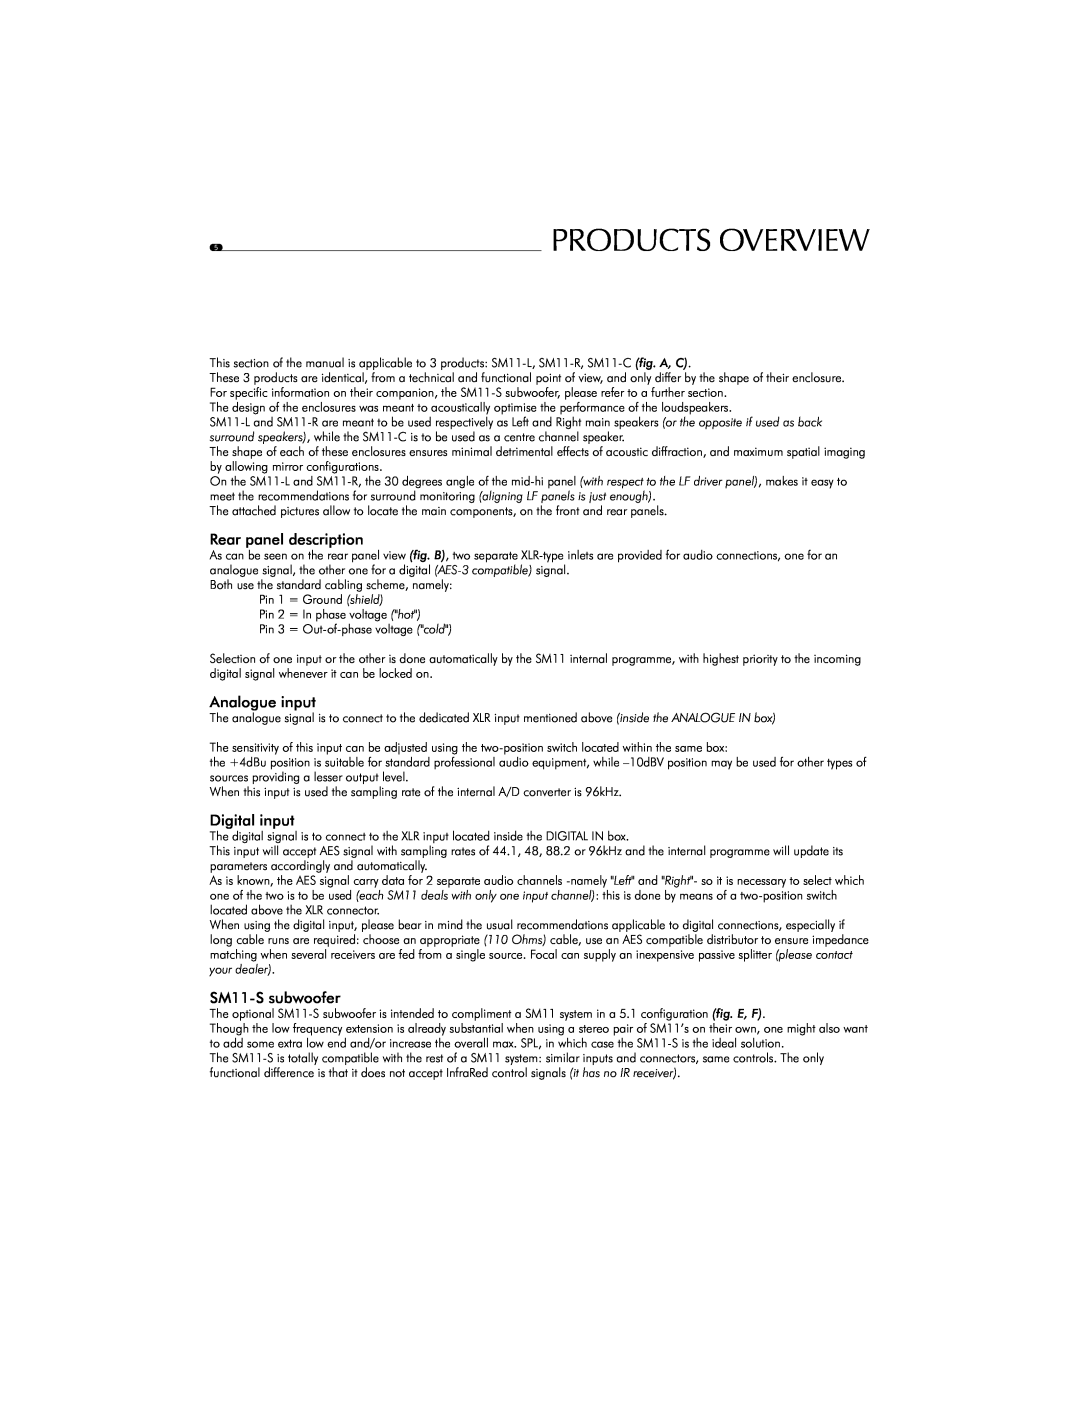 Focal user manual Products Overview, Rear panel description, Analogue input, Digital input, SM11-Ssubwoofer 